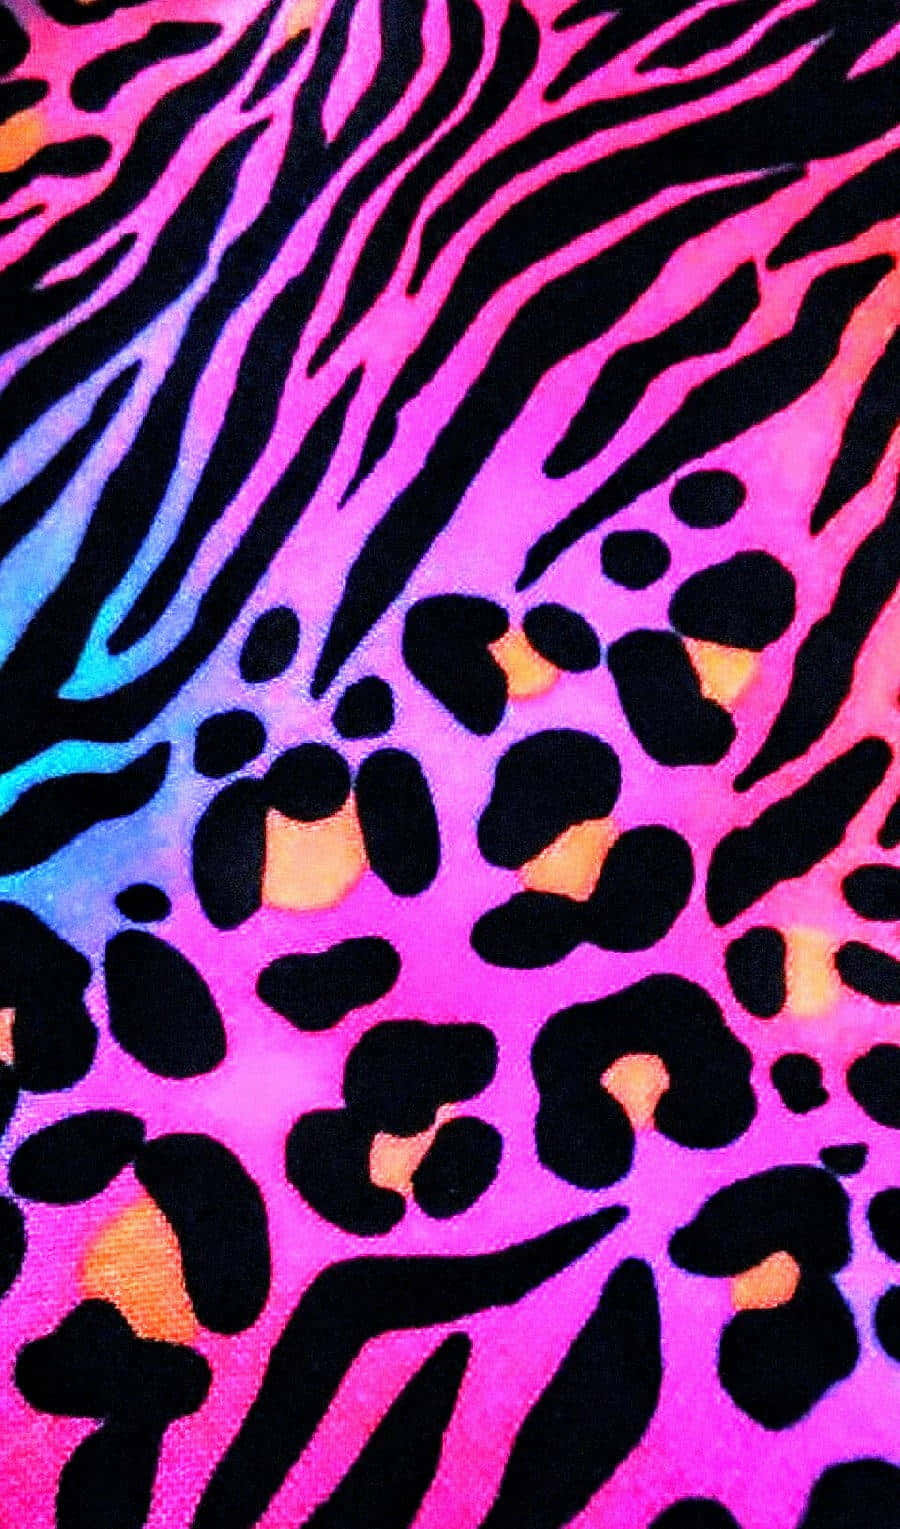 Caption: Exotic Feline Charm: Cute Pink Cheetah Print Wallpaper Wallpaper